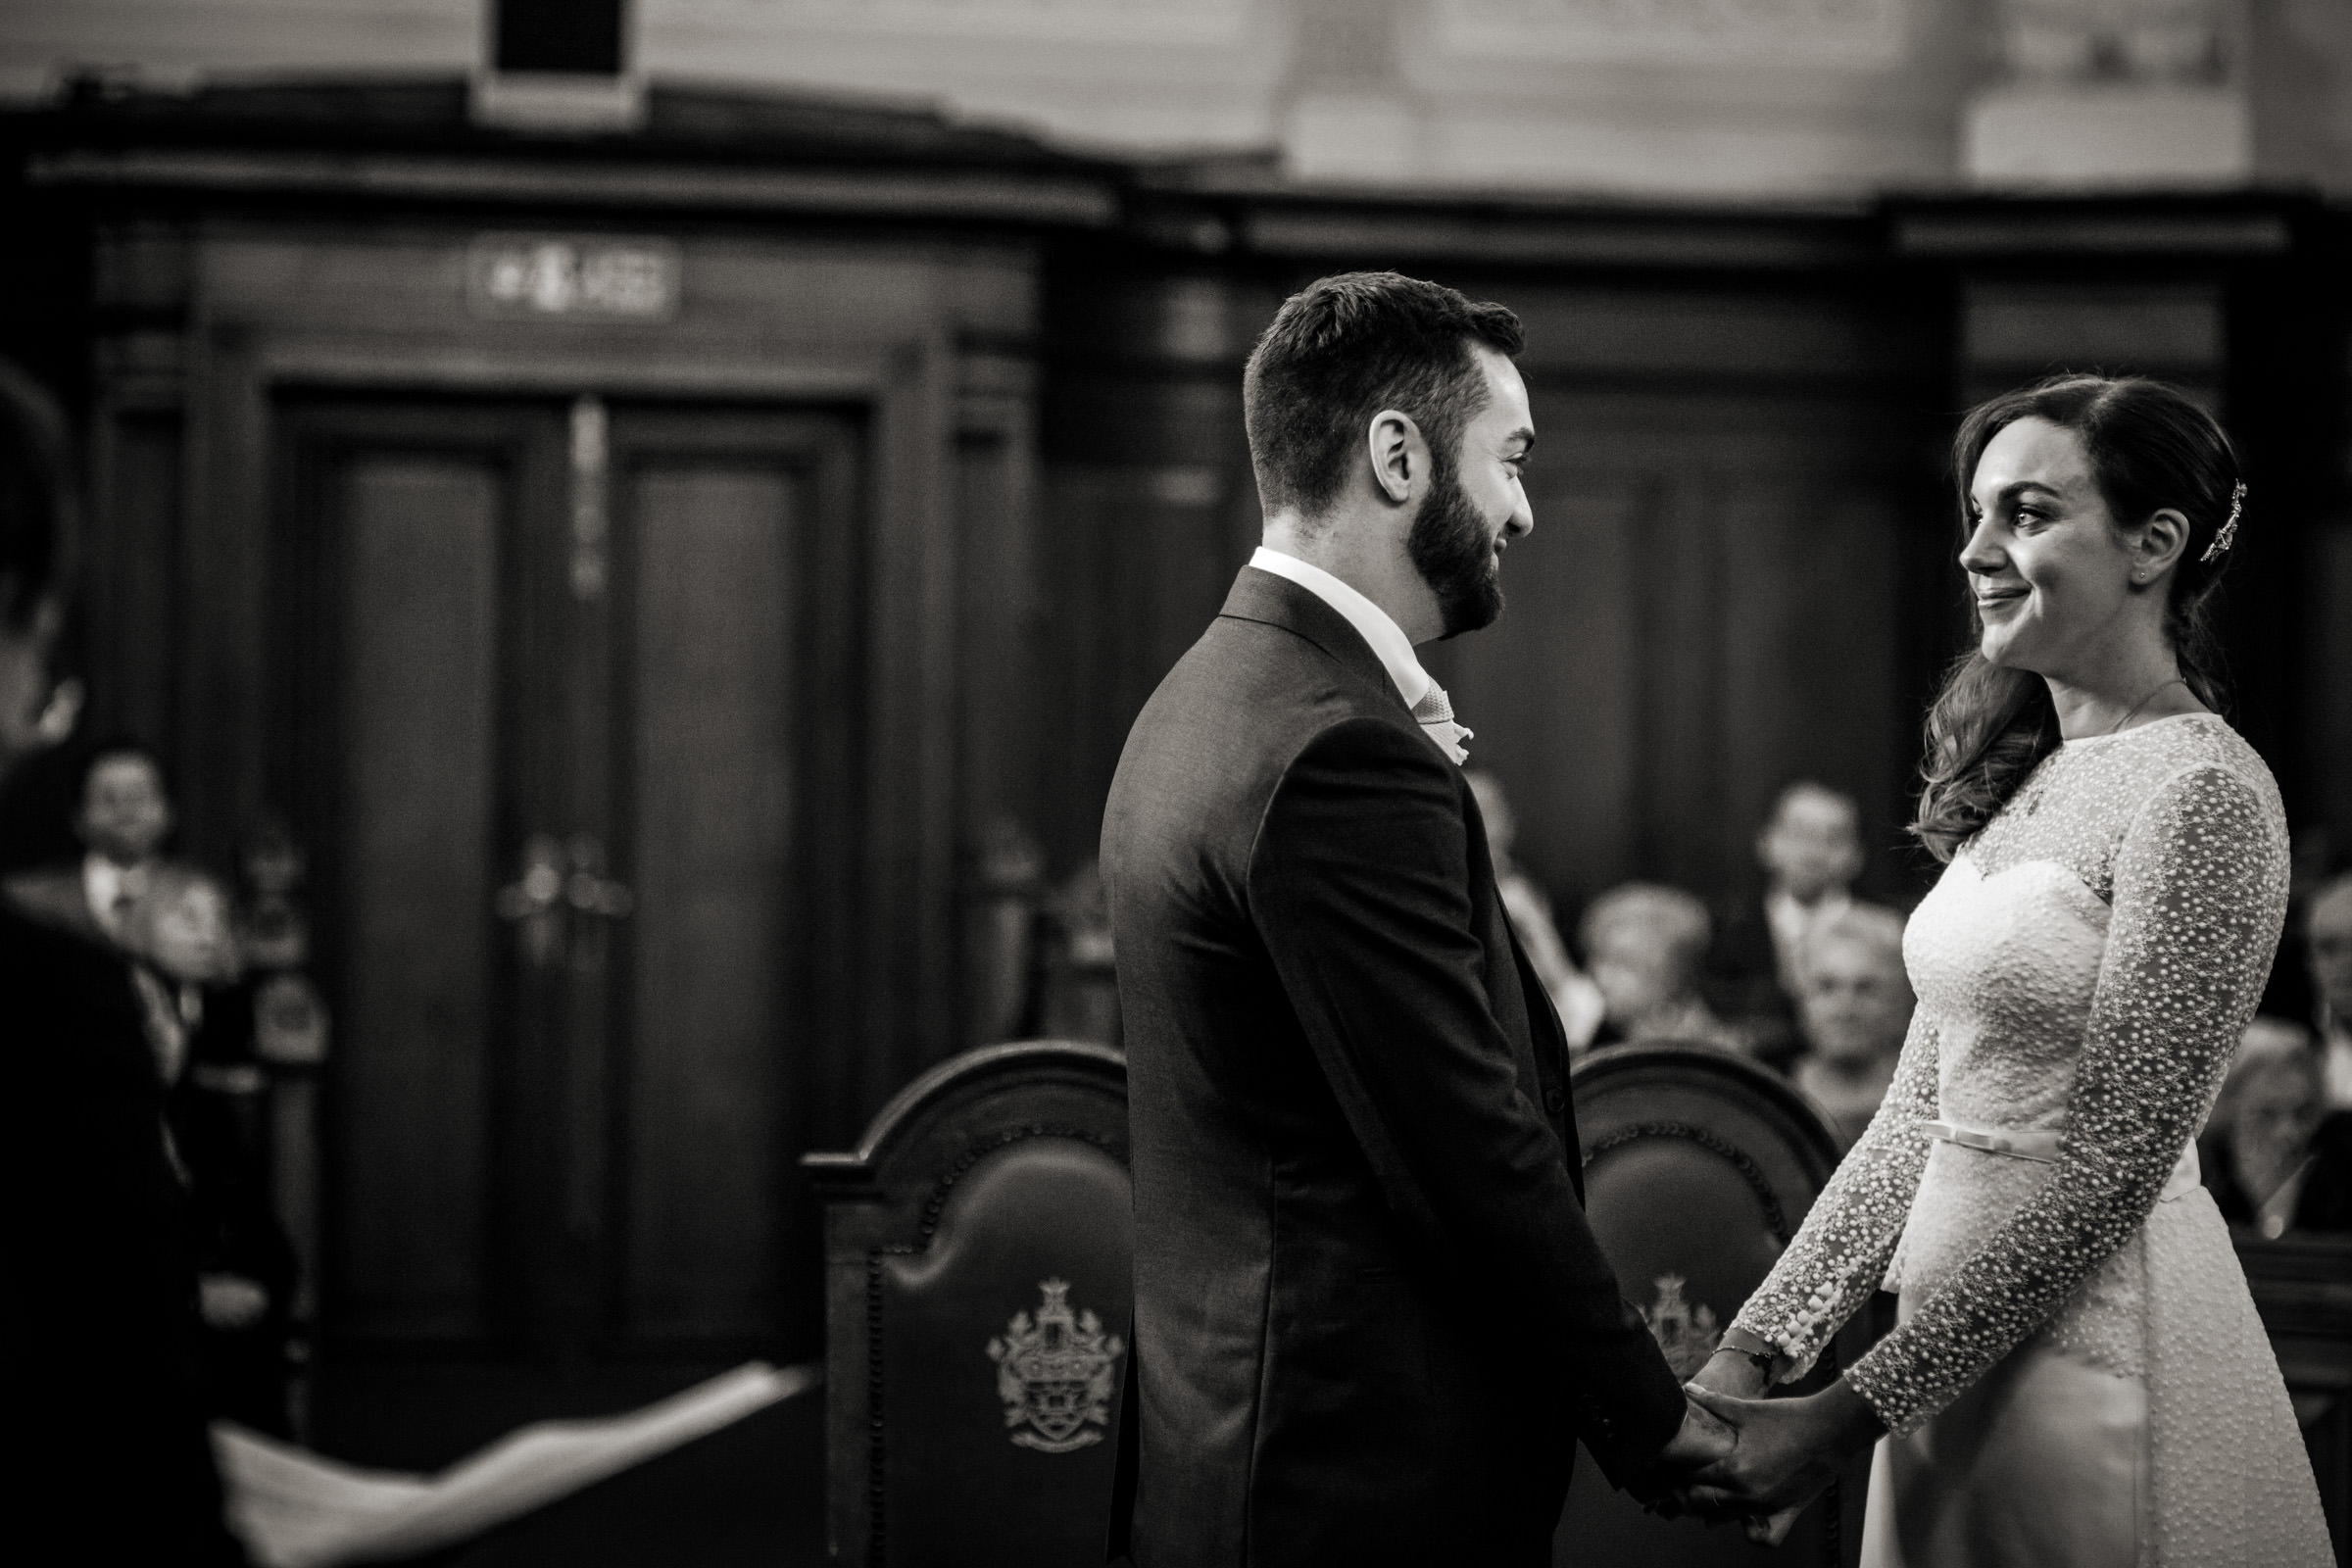 documentary wedding photography in nroth london 014.jpg